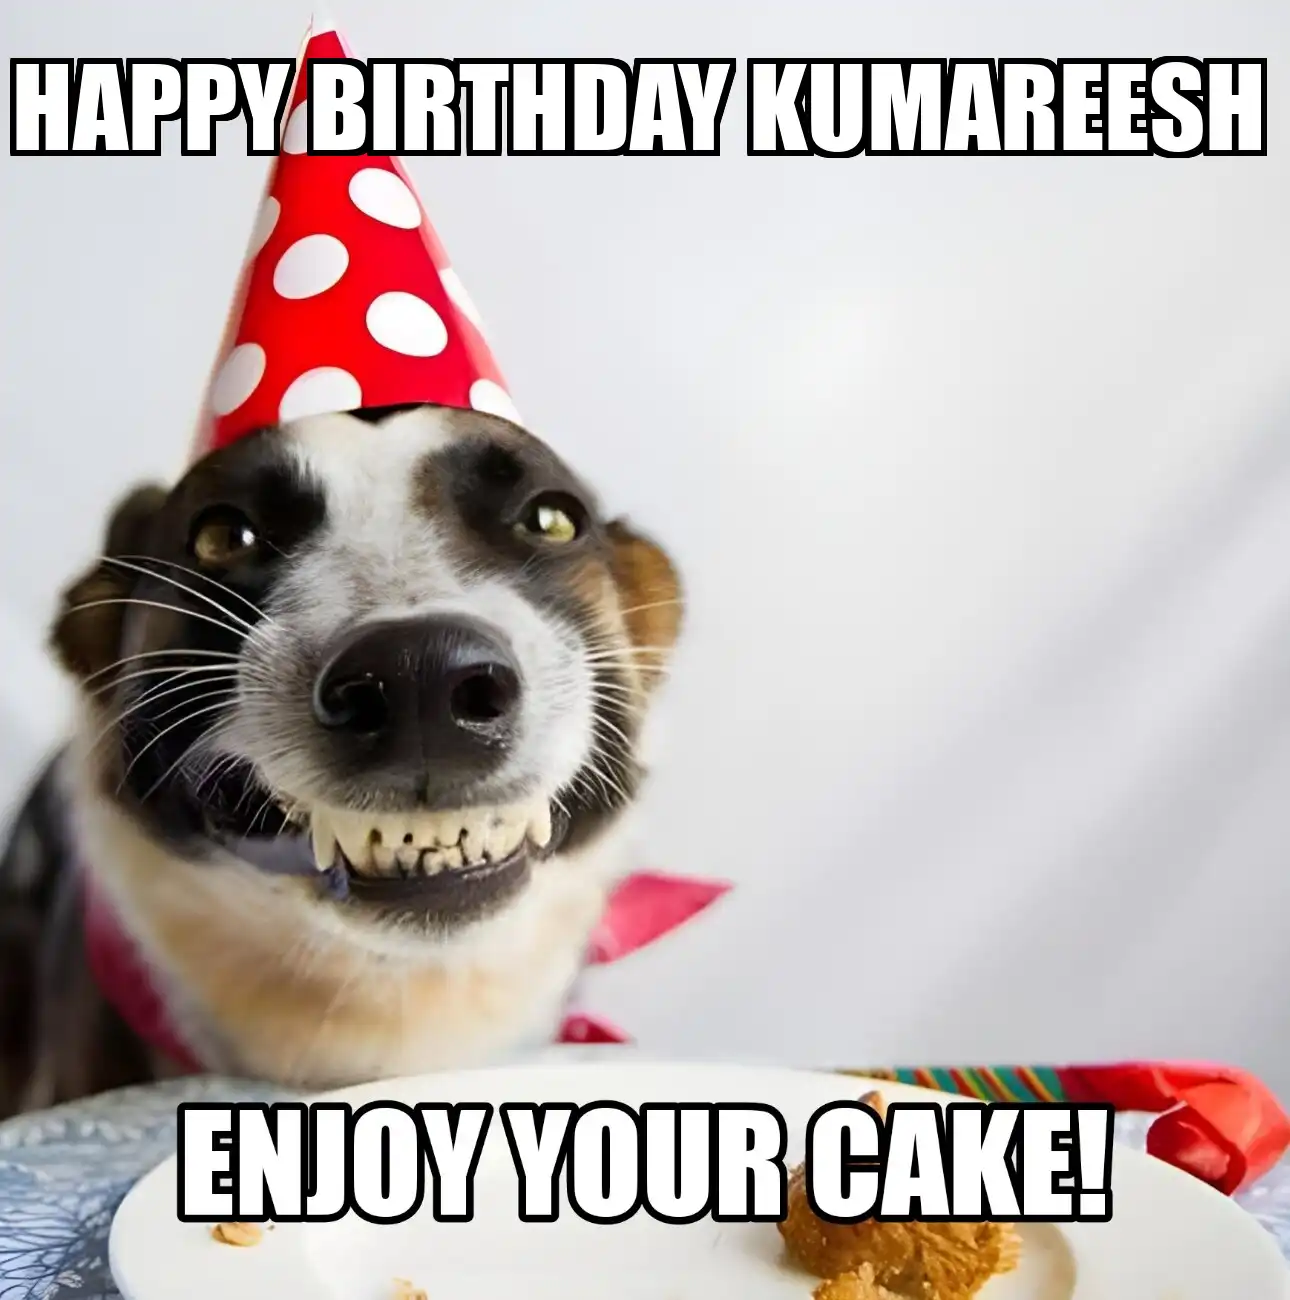 Happy Birthday Kumareesh Enjoy Your Cake Dog Meme